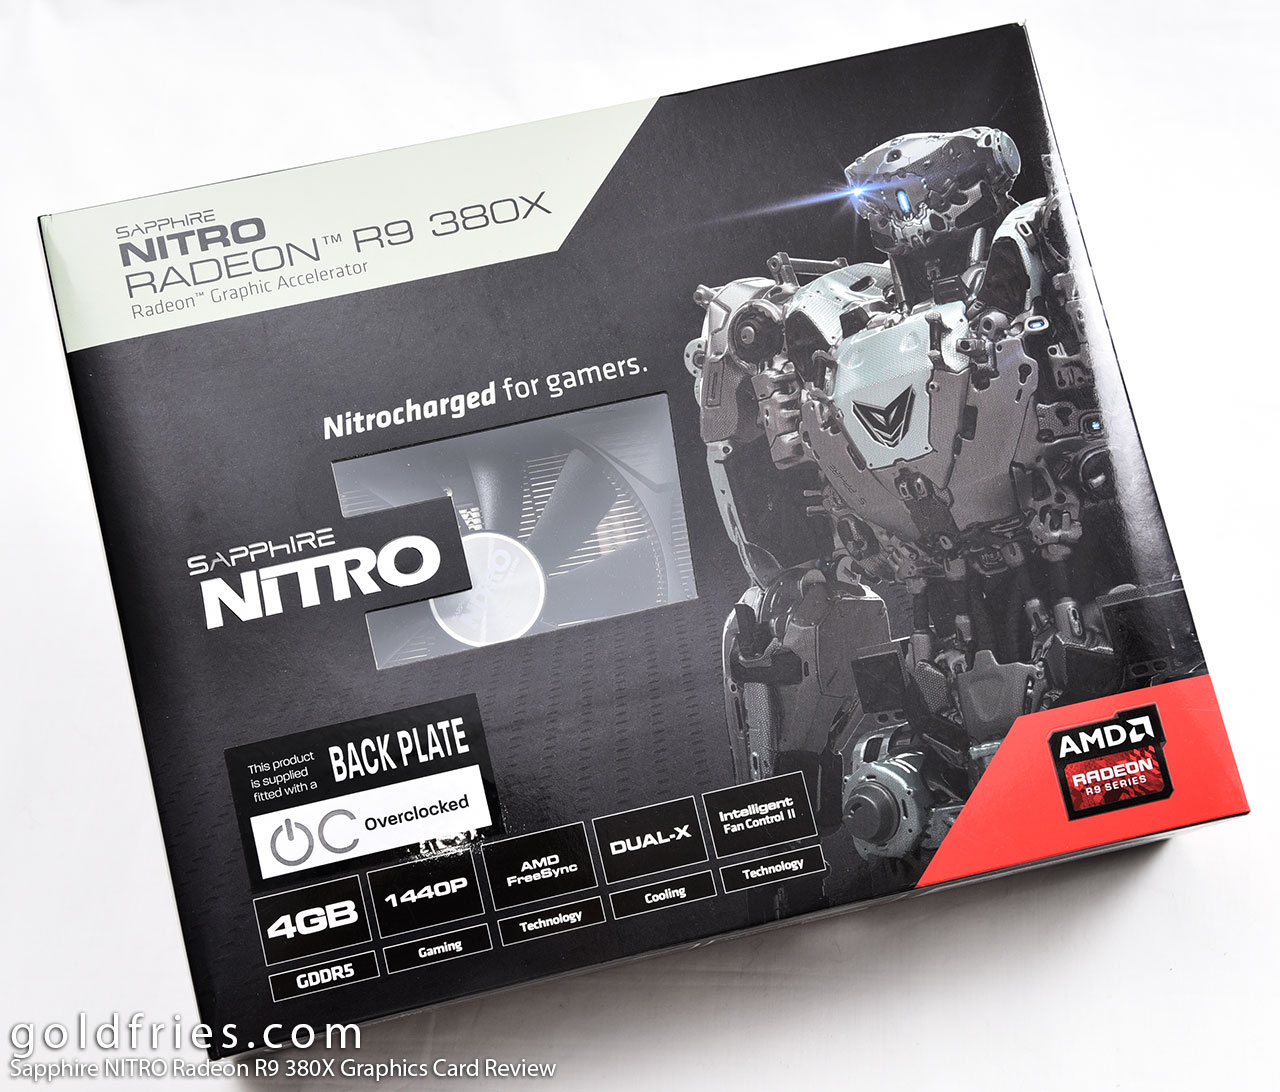 Sapphire NITRO Radeon R9 380X Graphics Card Review